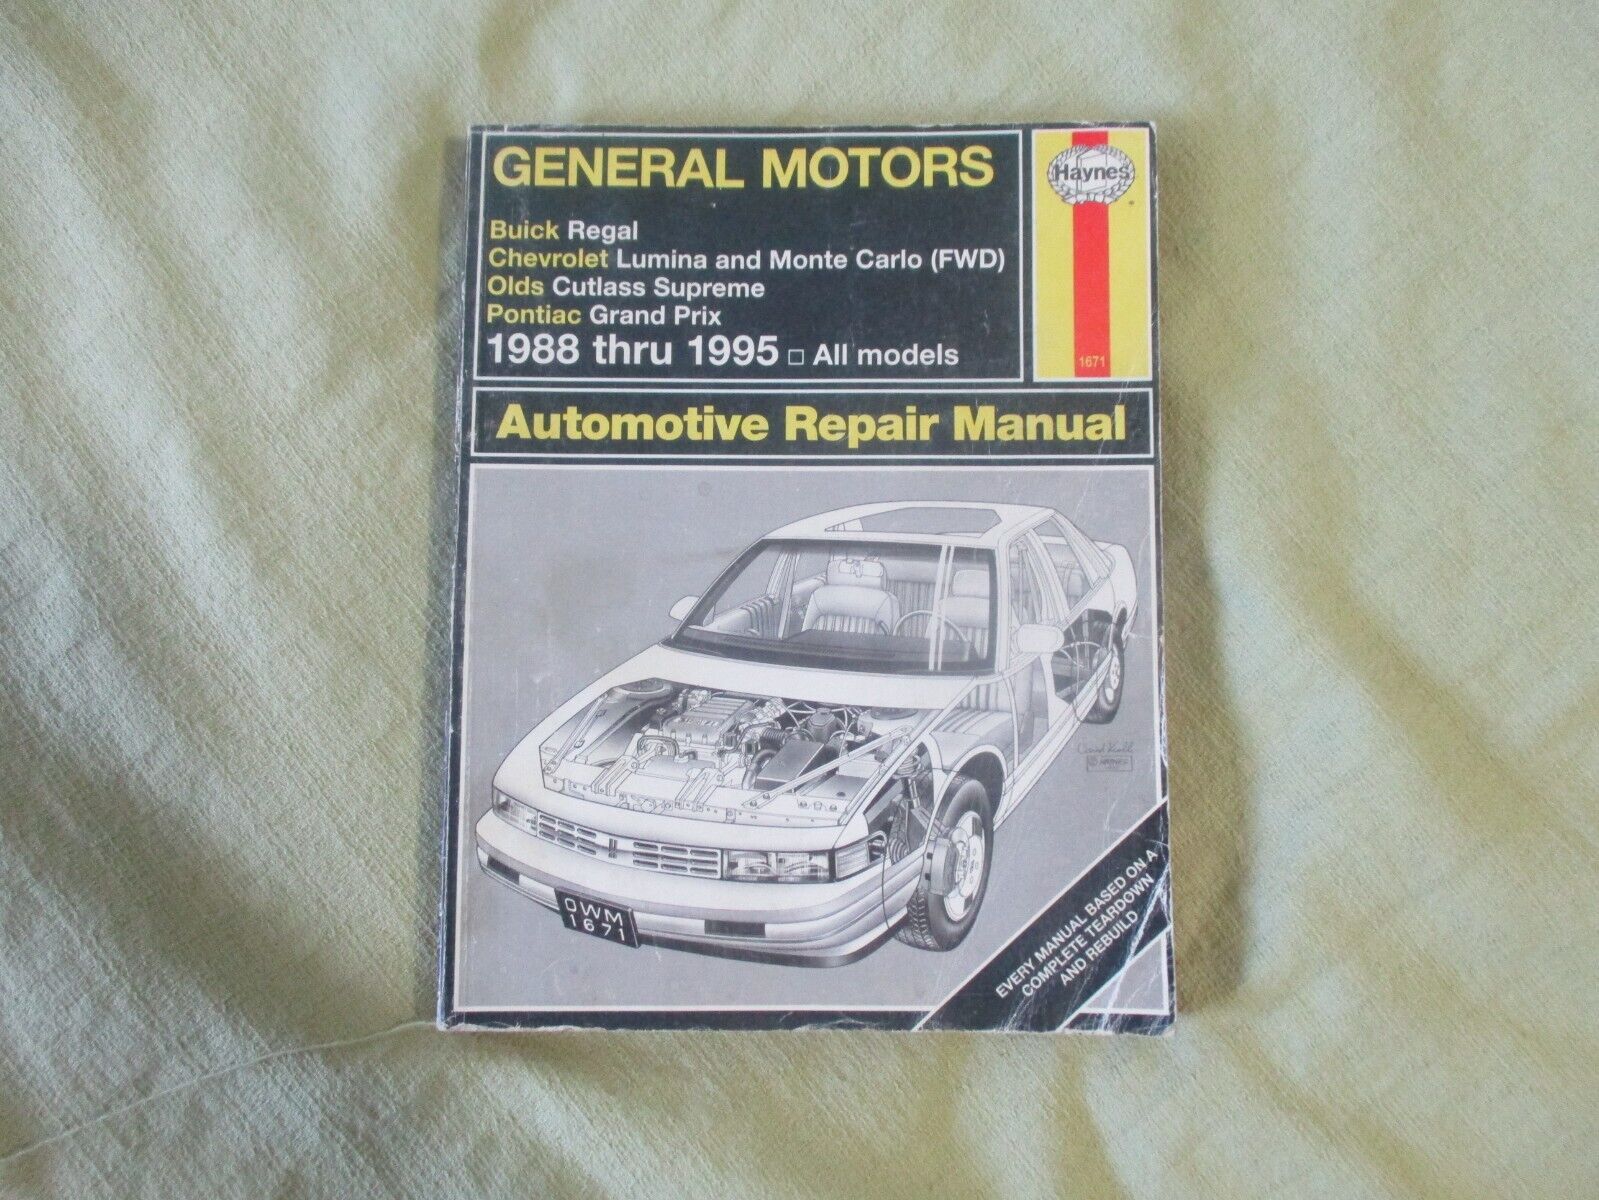 Haynes Repair Manual  1671 General Motors Chevy Olds Pontiac Buick 1988 thru 95